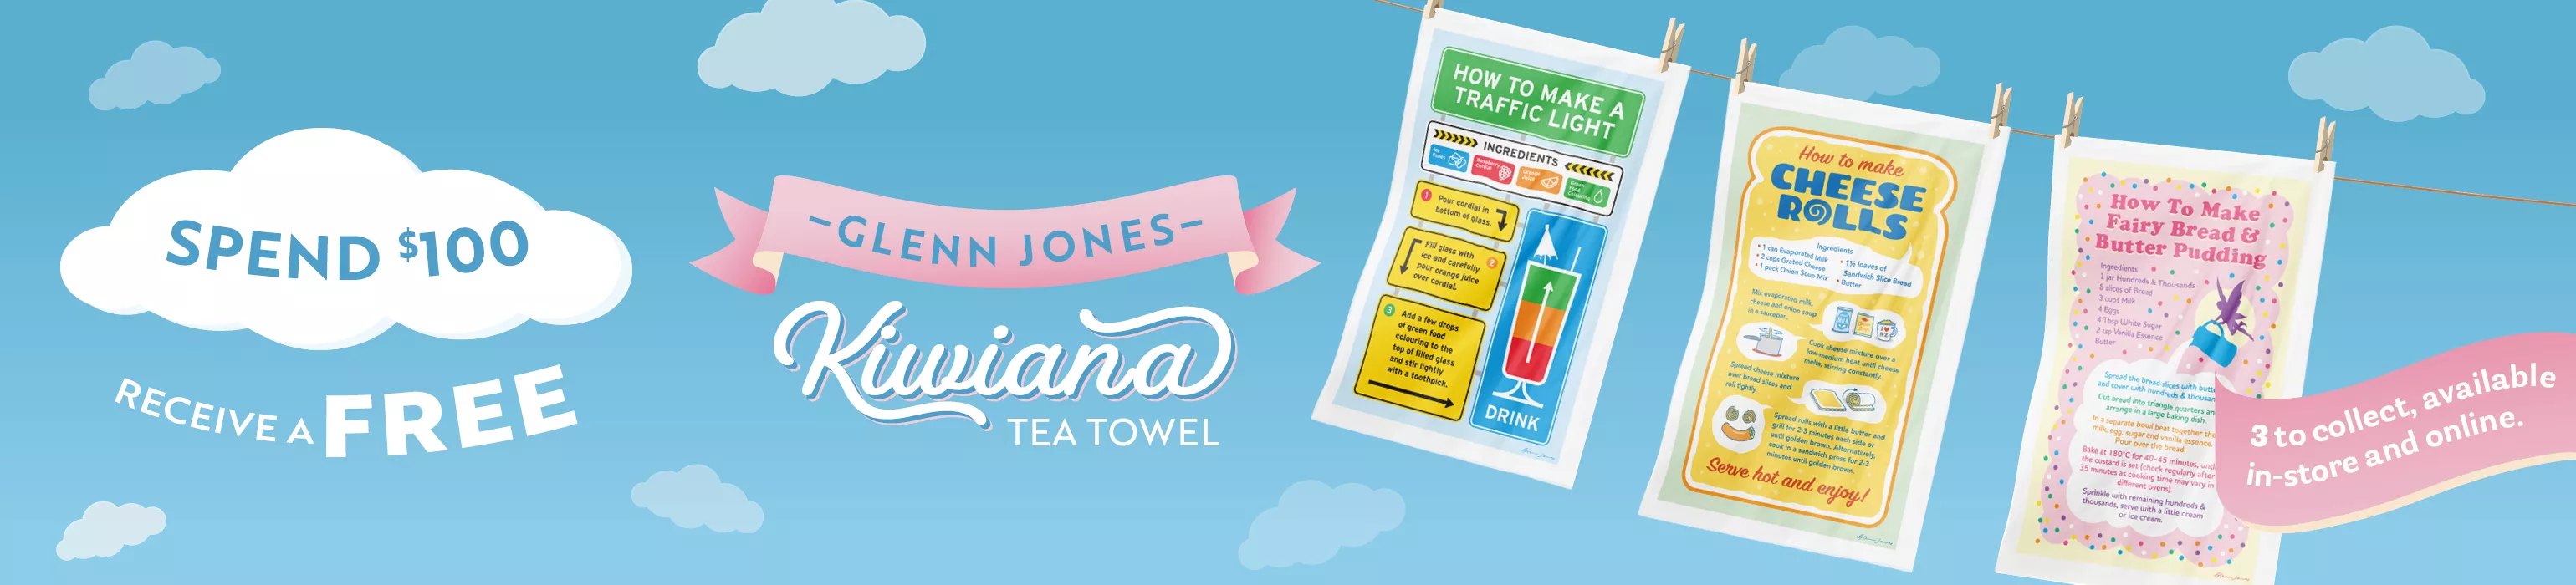 Glenn Jones Tea Towel Giveaway